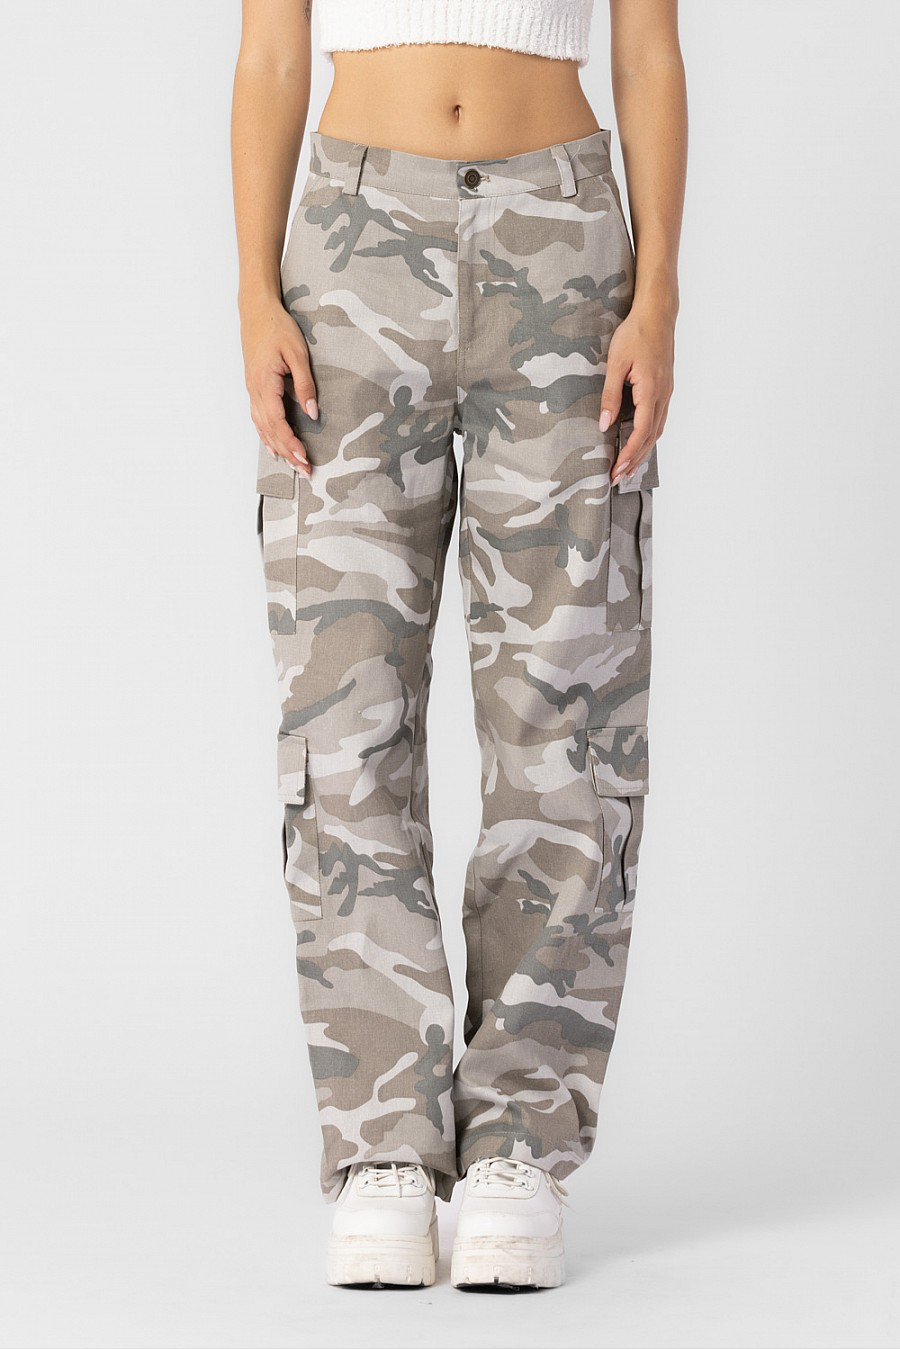 Grey camouflage cargo pants.